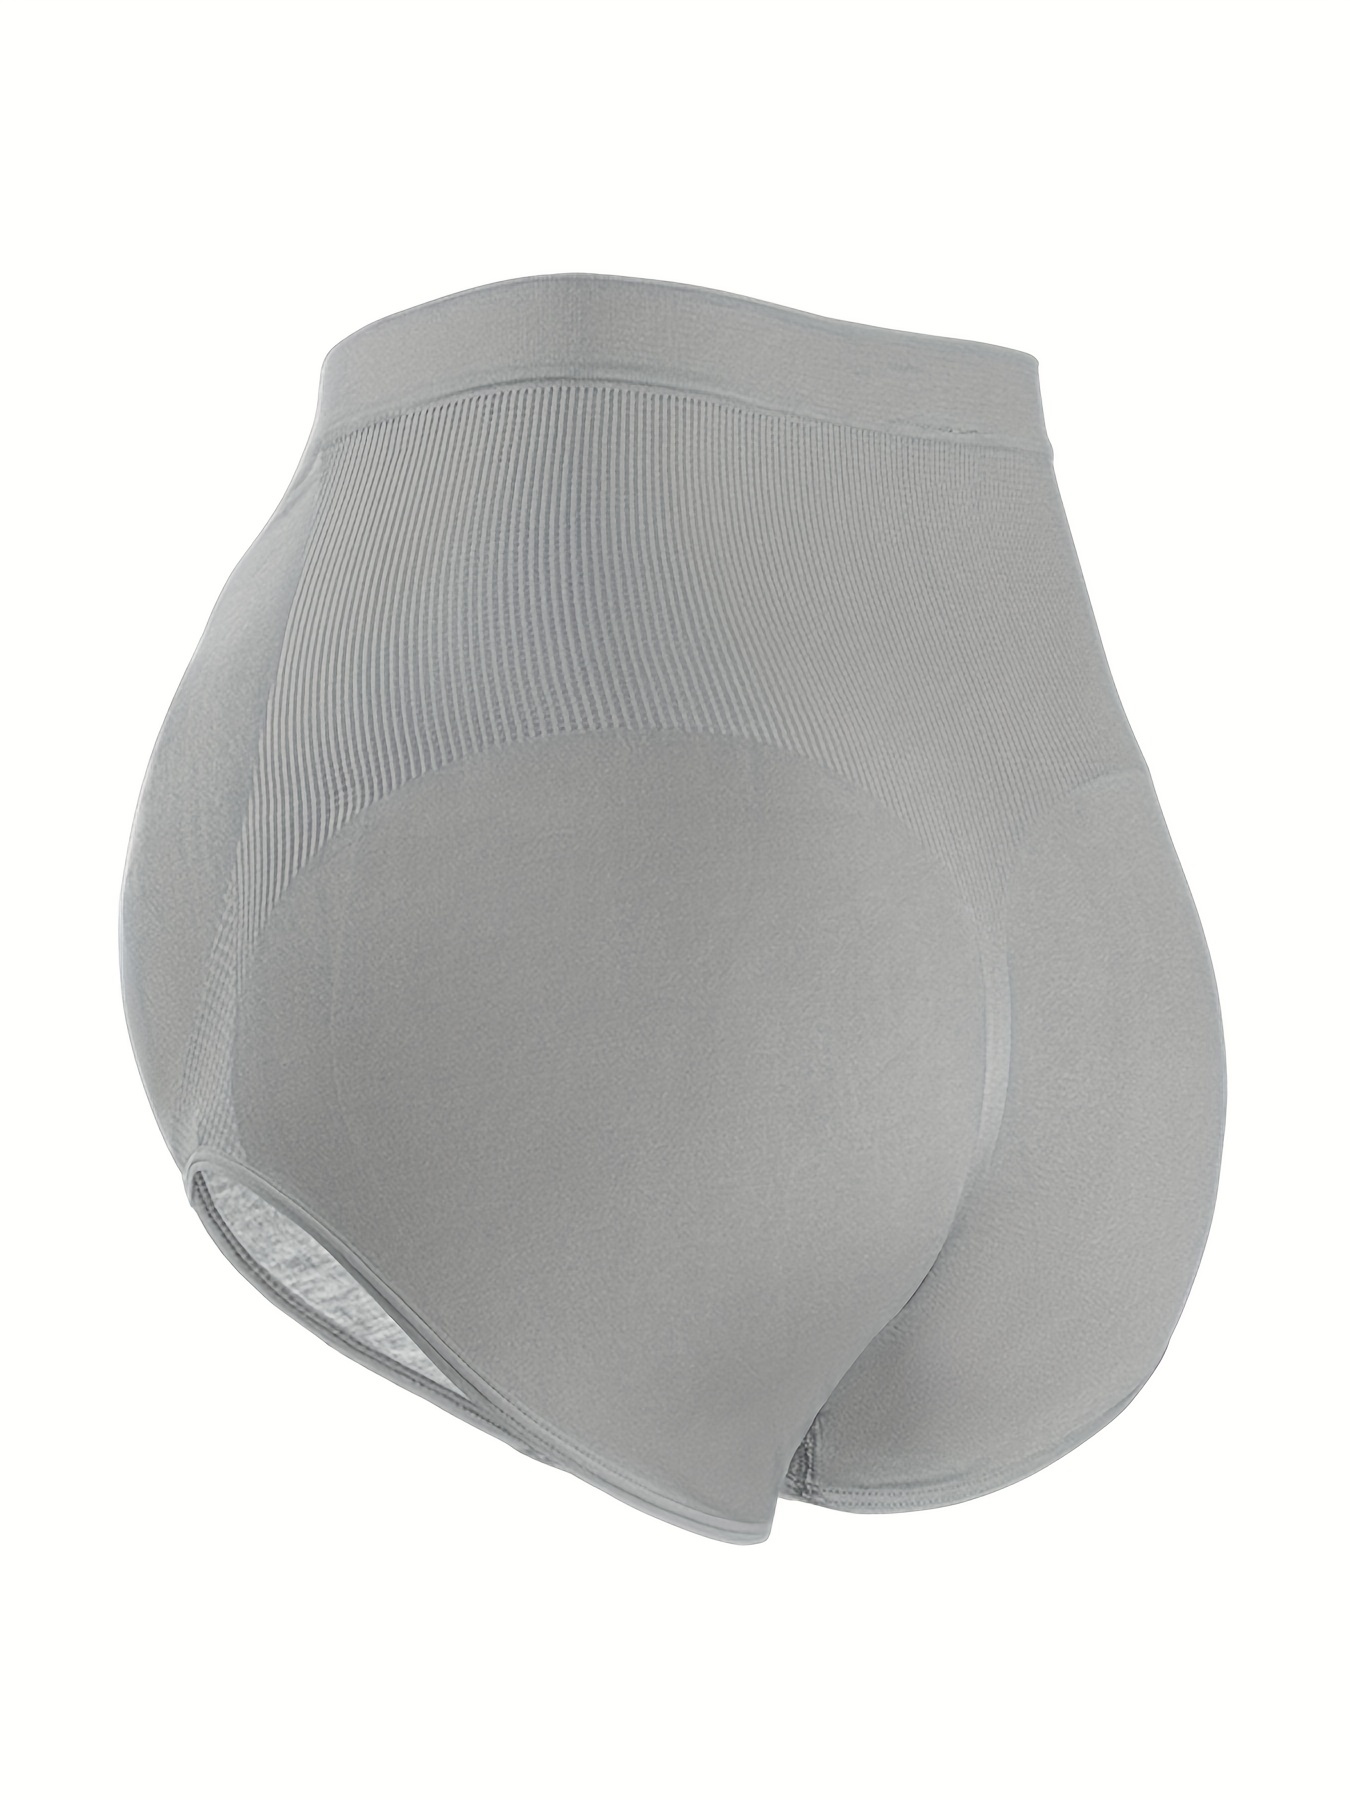 XWSM Pregnant Maternity Underwear Elastic Abdomen Support Panties Briefs  for Pregnancy Women Ladies Panty Sleep Underpants (Color : Bean Paste, Size  : 40-60kg) : : Clothing, Shoes & Accessories